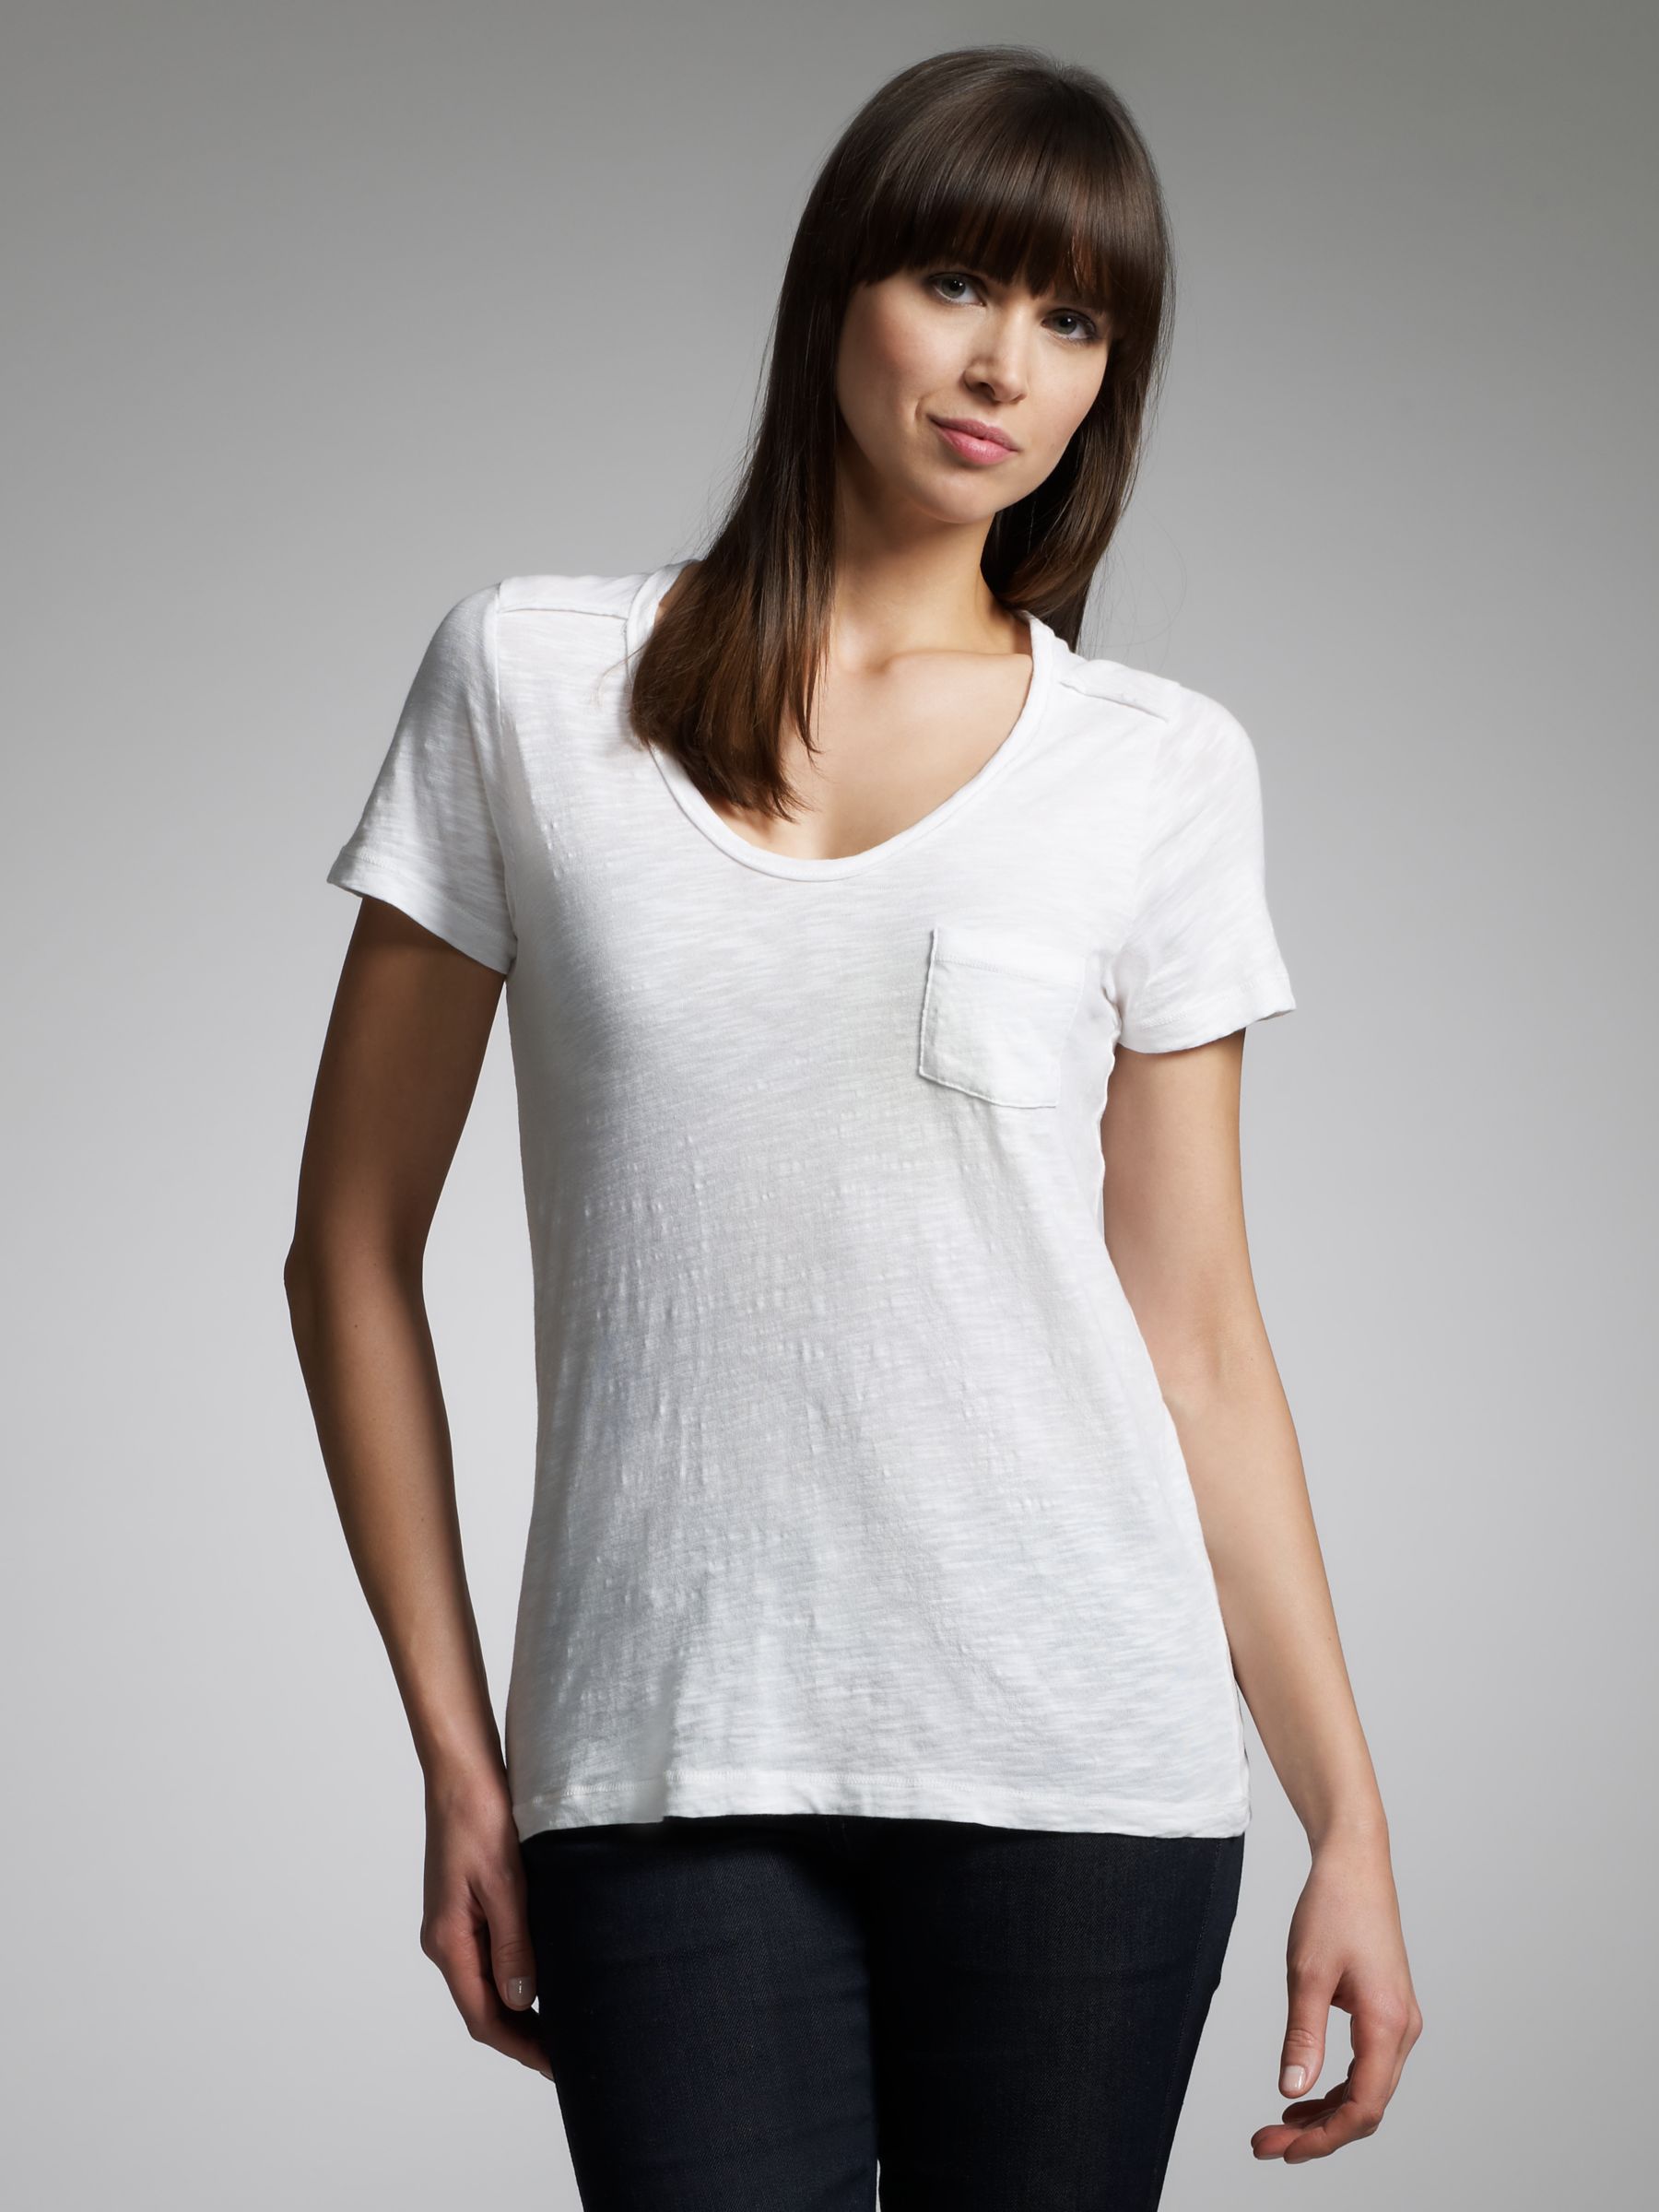 Freida Patch Pocket Cotton T-Shirt, White